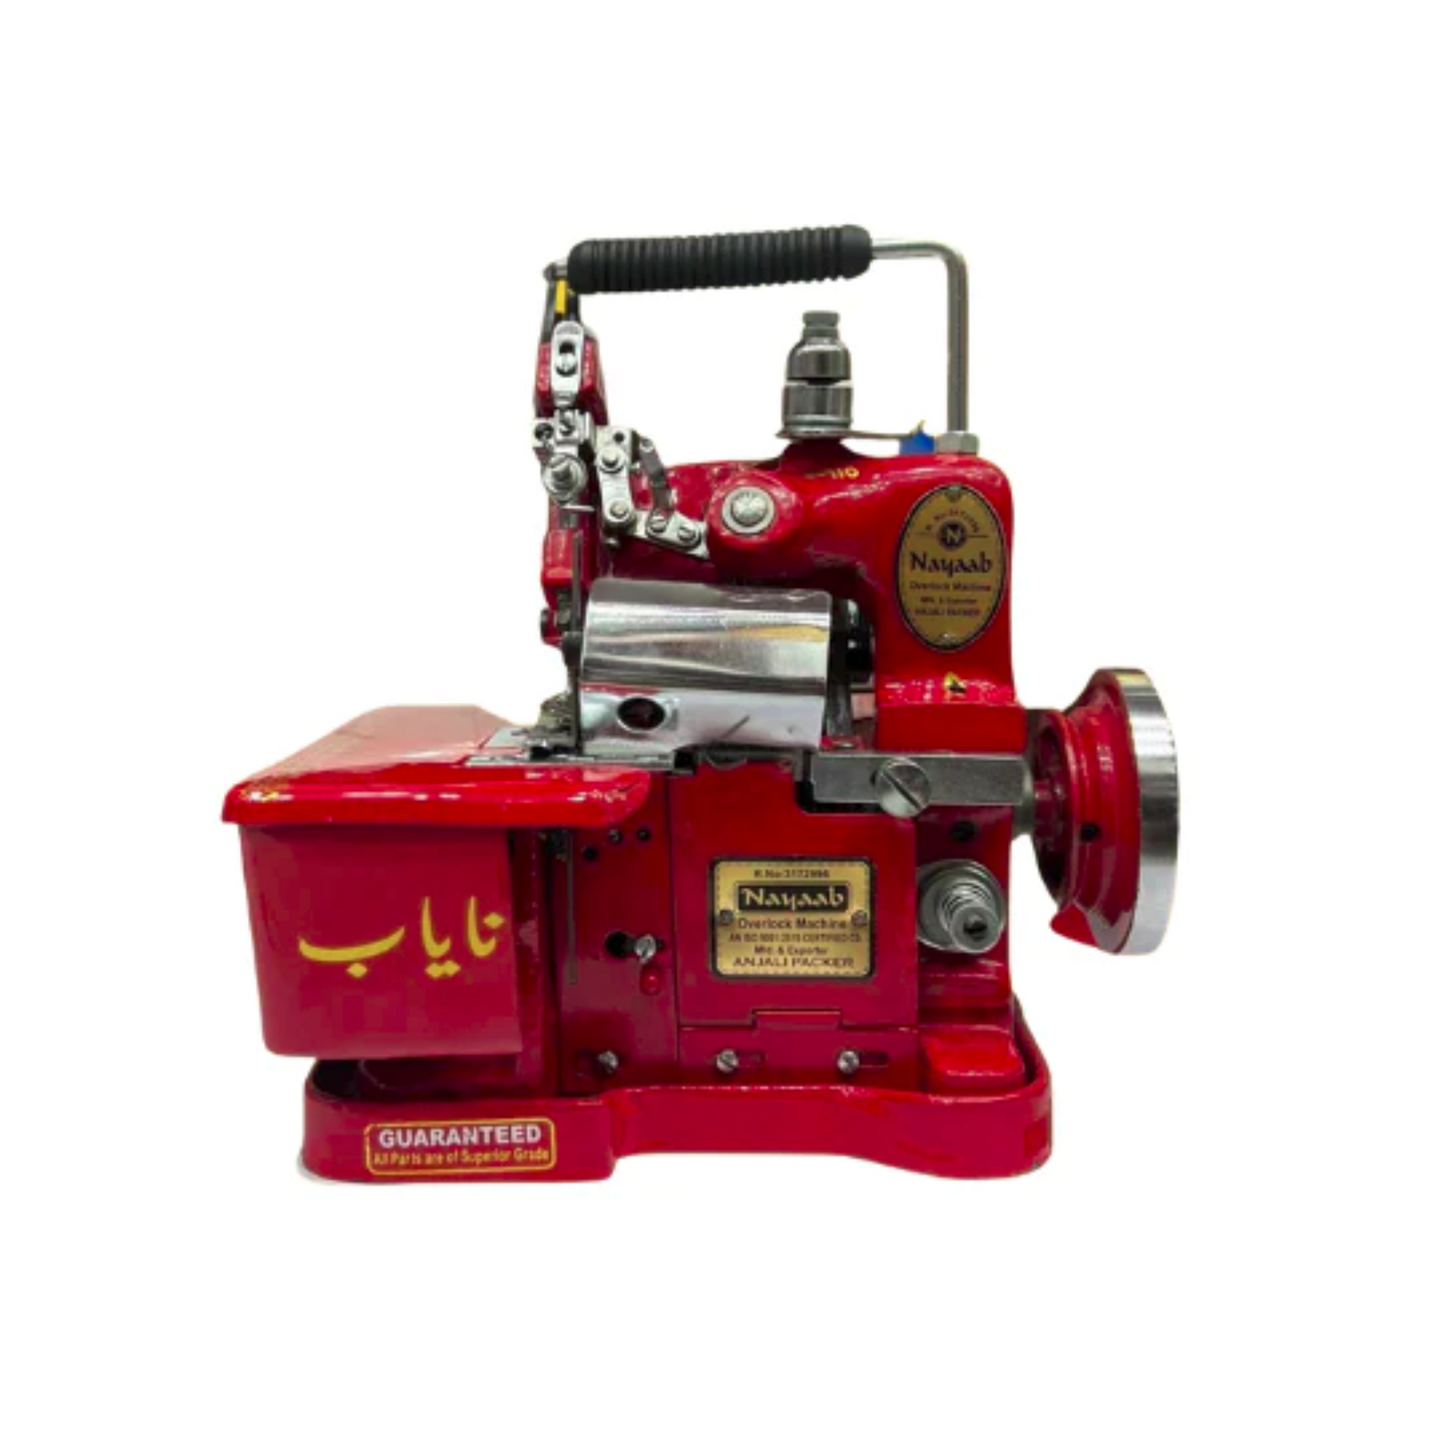 Nayaab industrial -  Overlock machine - Red - Front view